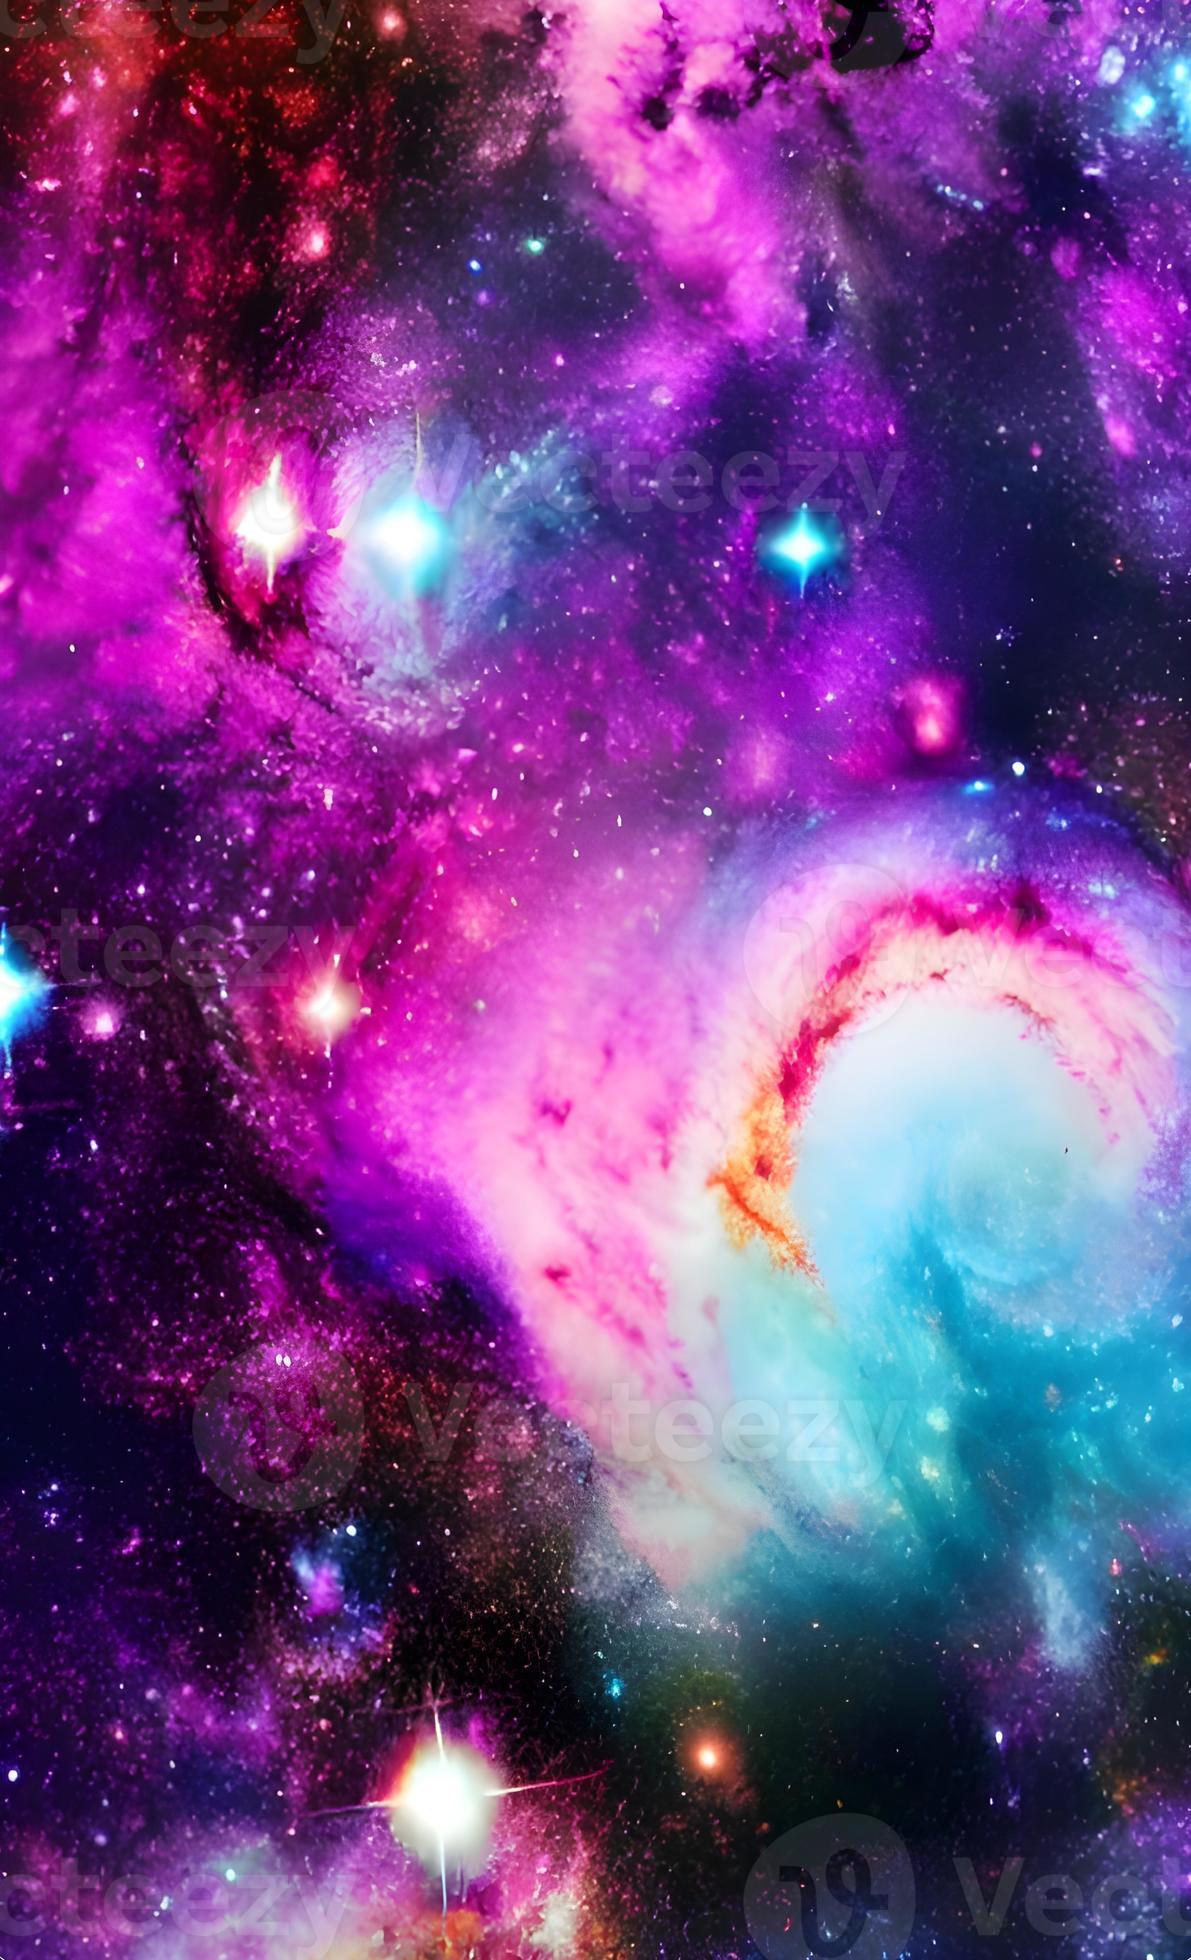 Galaxy Space background universe magic sky nebula night purple cosmos. Cosmic galaxy wallpaper blue color star dust. Blue texture abstract galaxy infinite future dark deep light